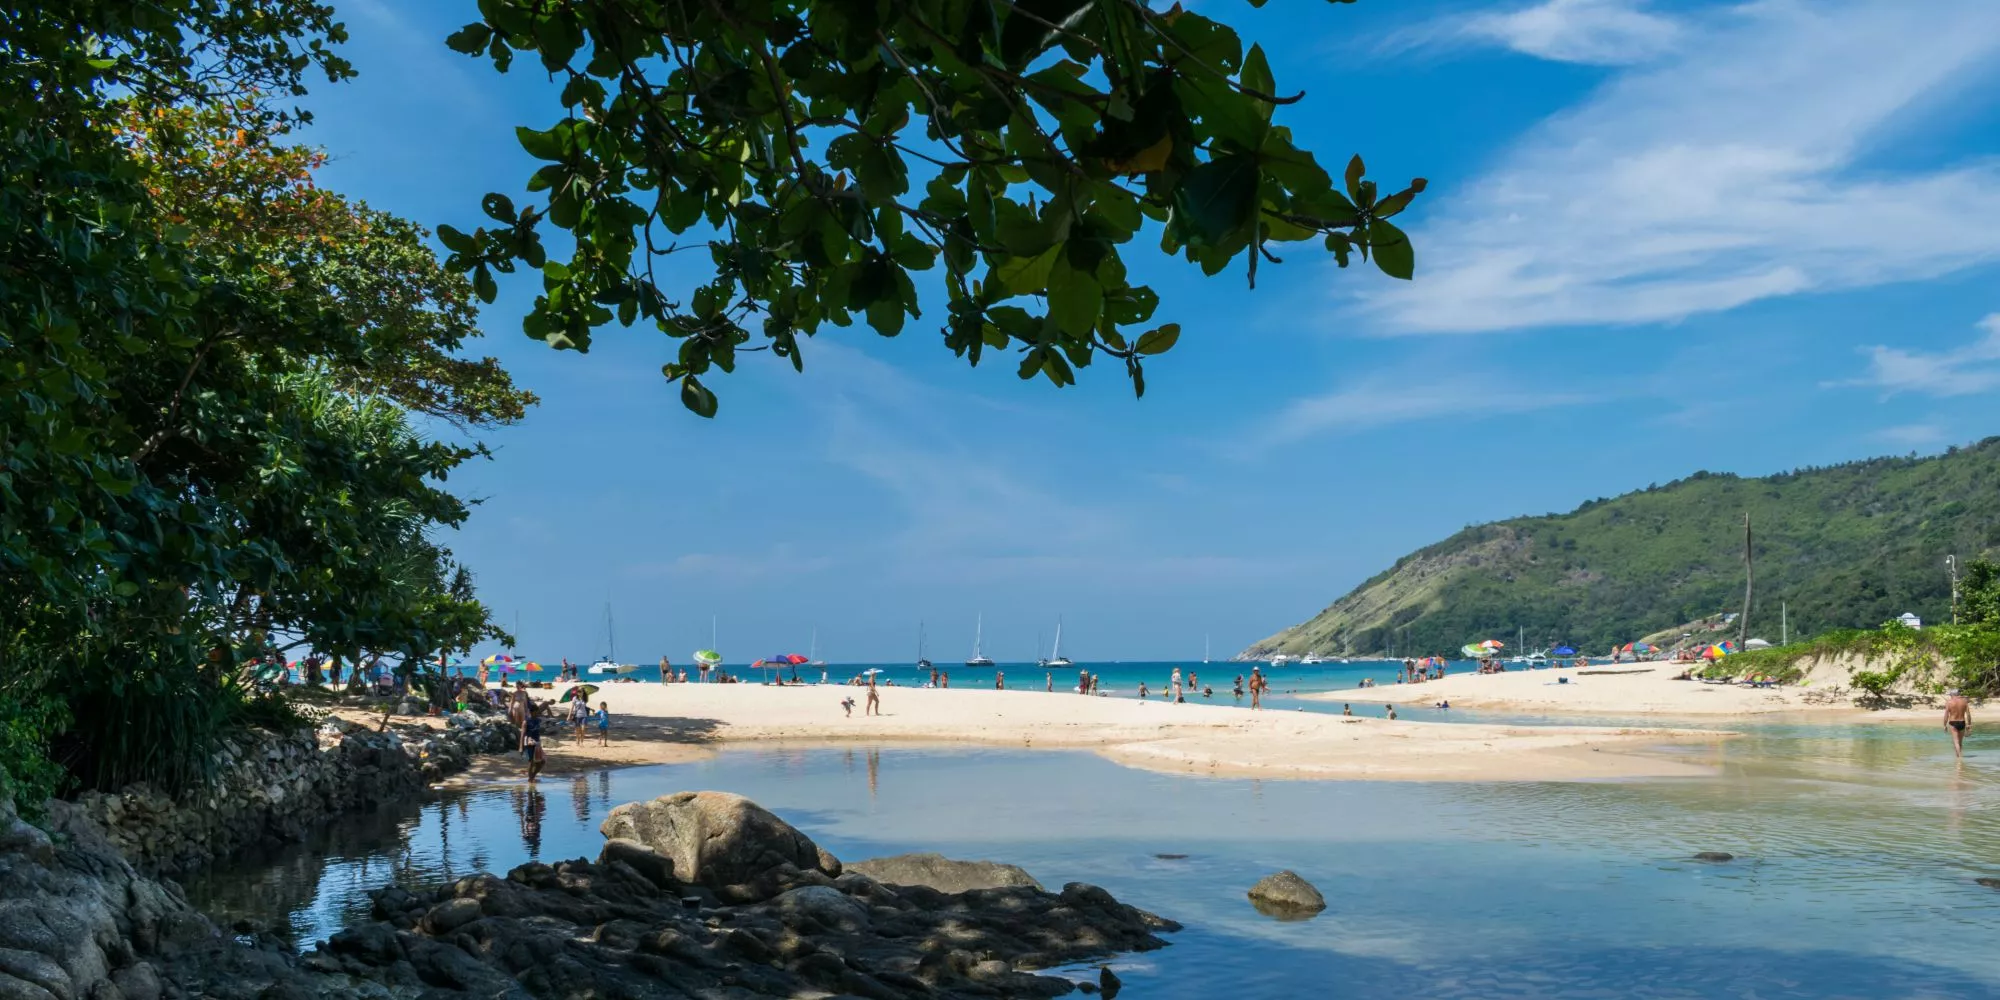 Nai Harn Beach in Thailand, Central Asia | Beaches - Rated 3.9